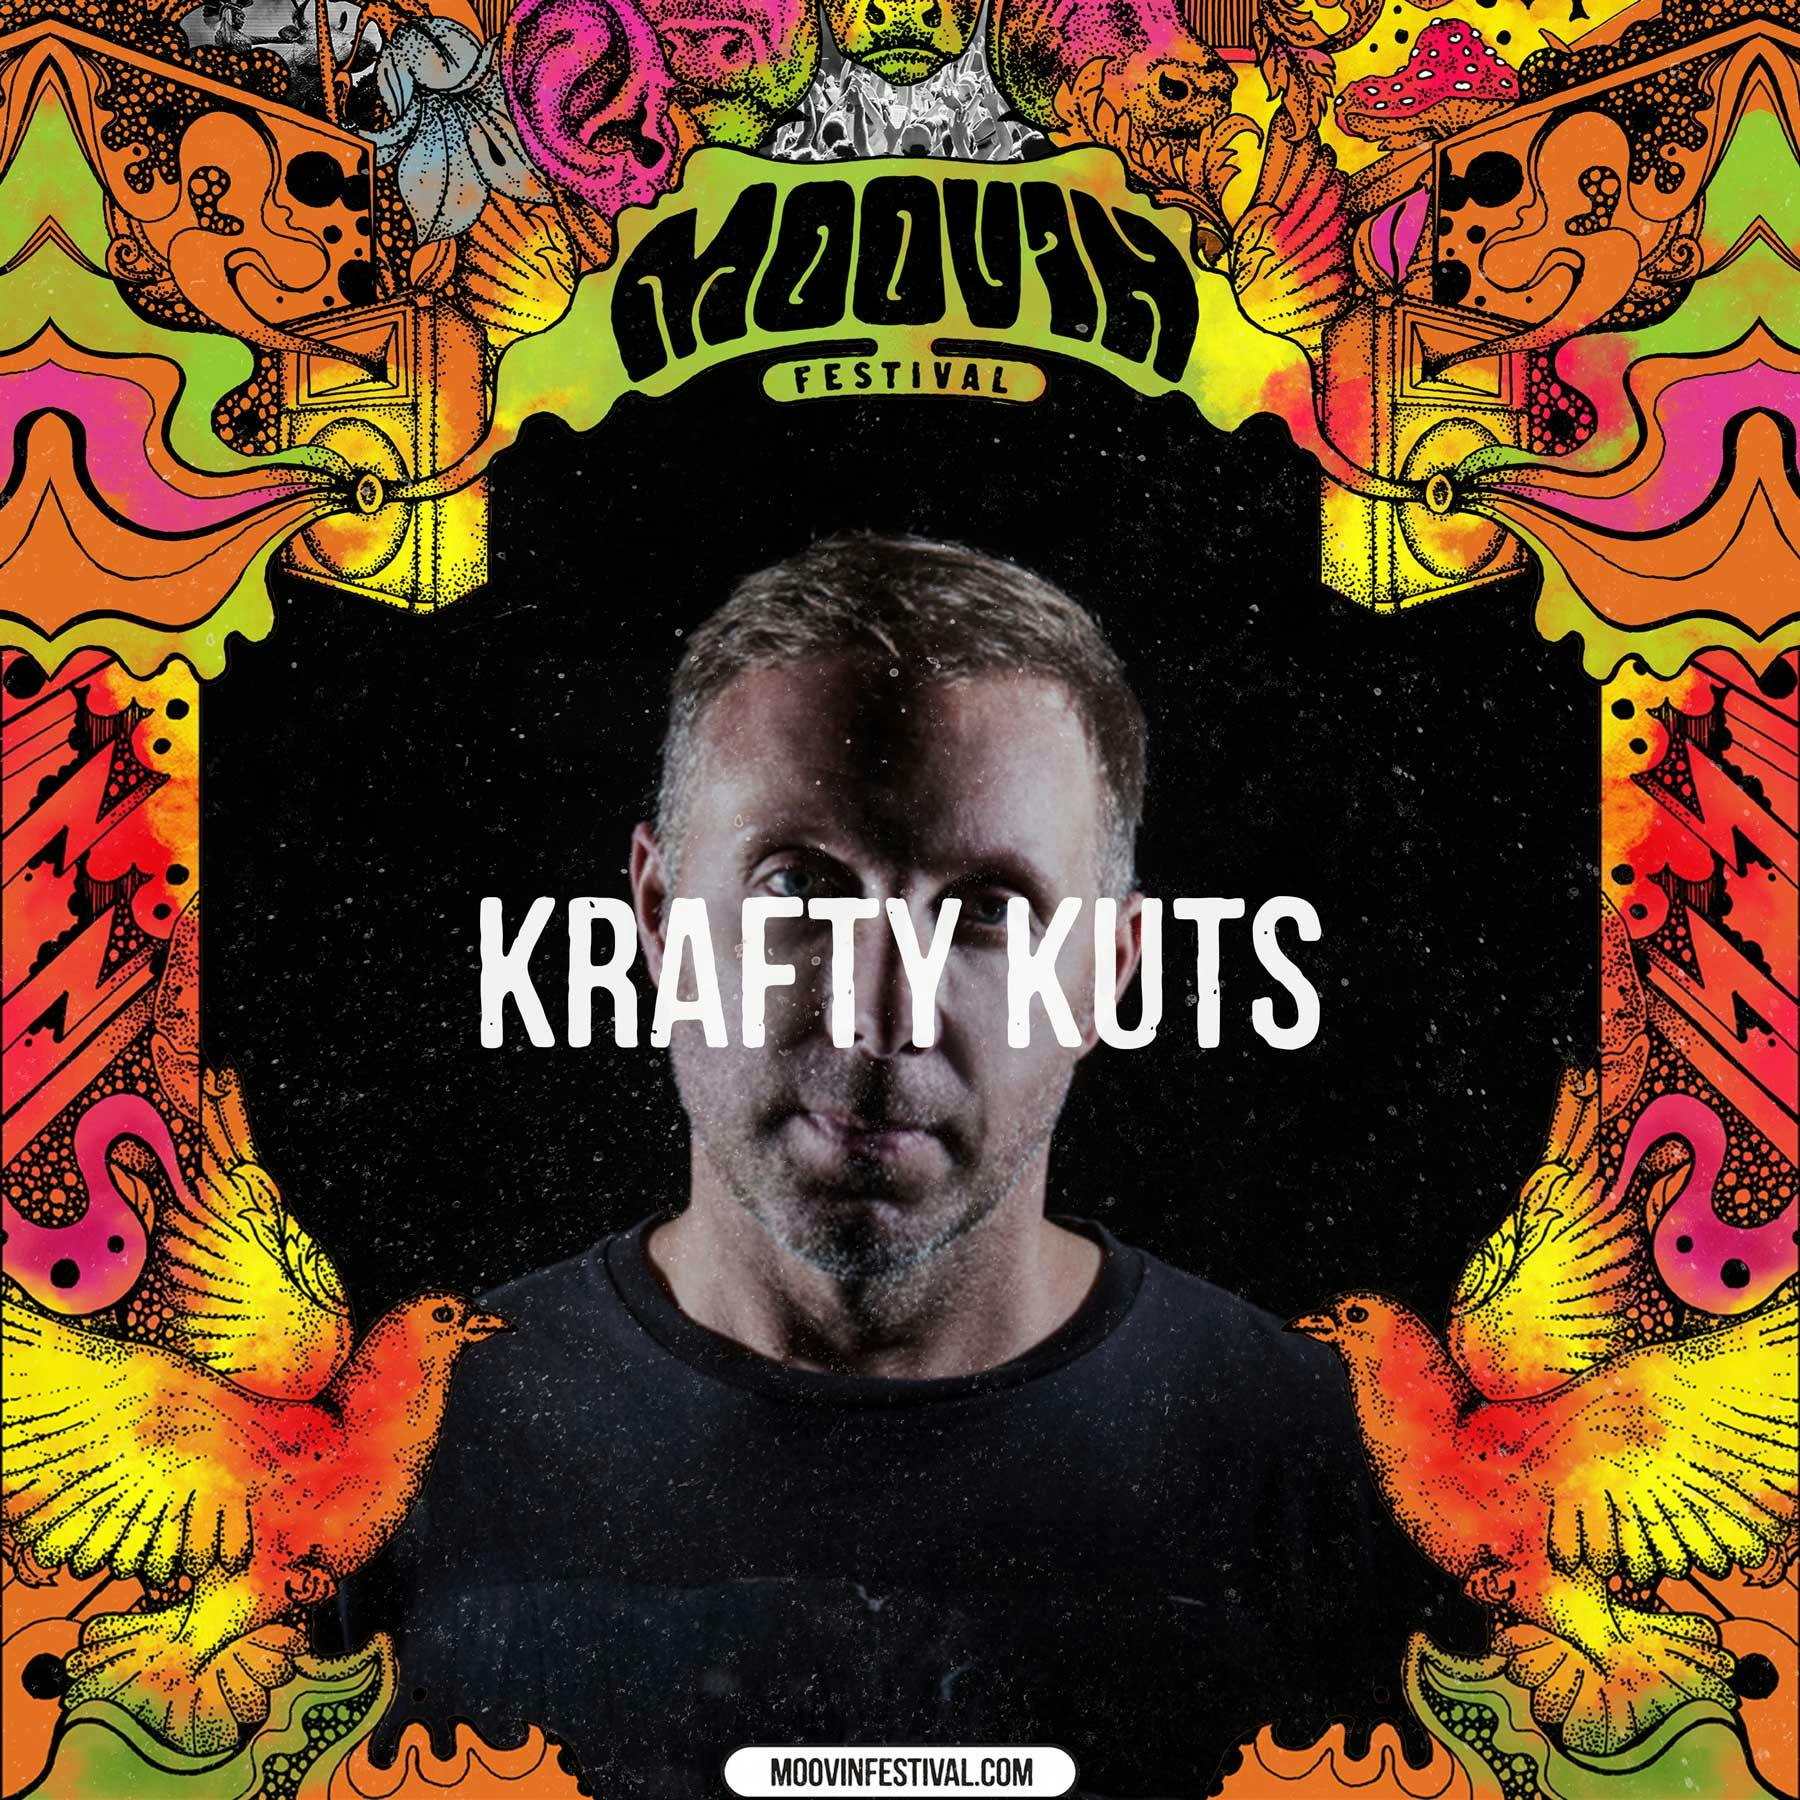 Introducing: Krafty Kuts